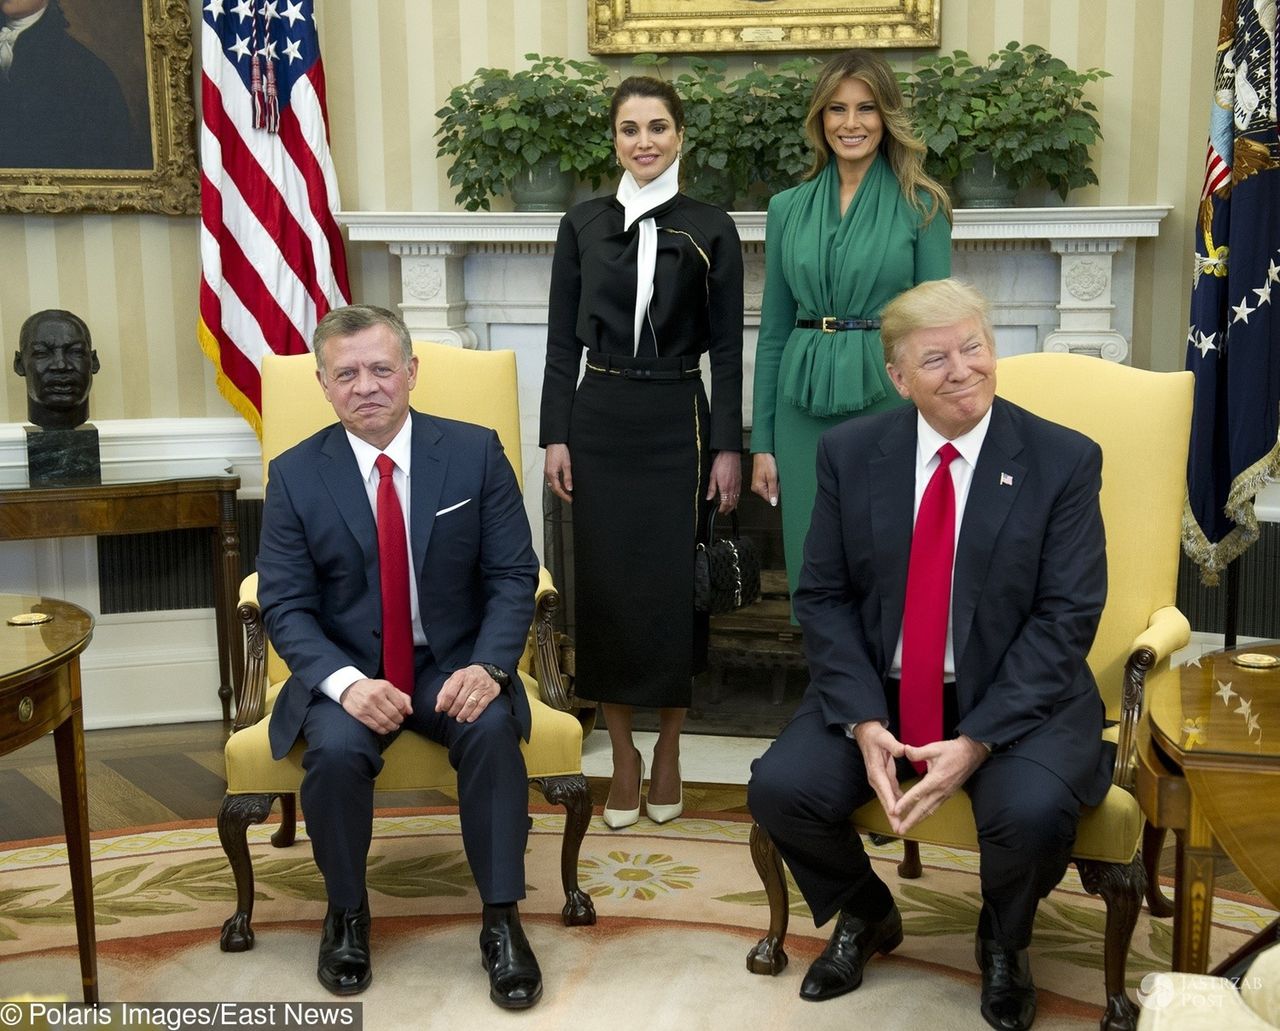 Jordańska para królewska w USA - z Donaldem Trumpem i Melanią